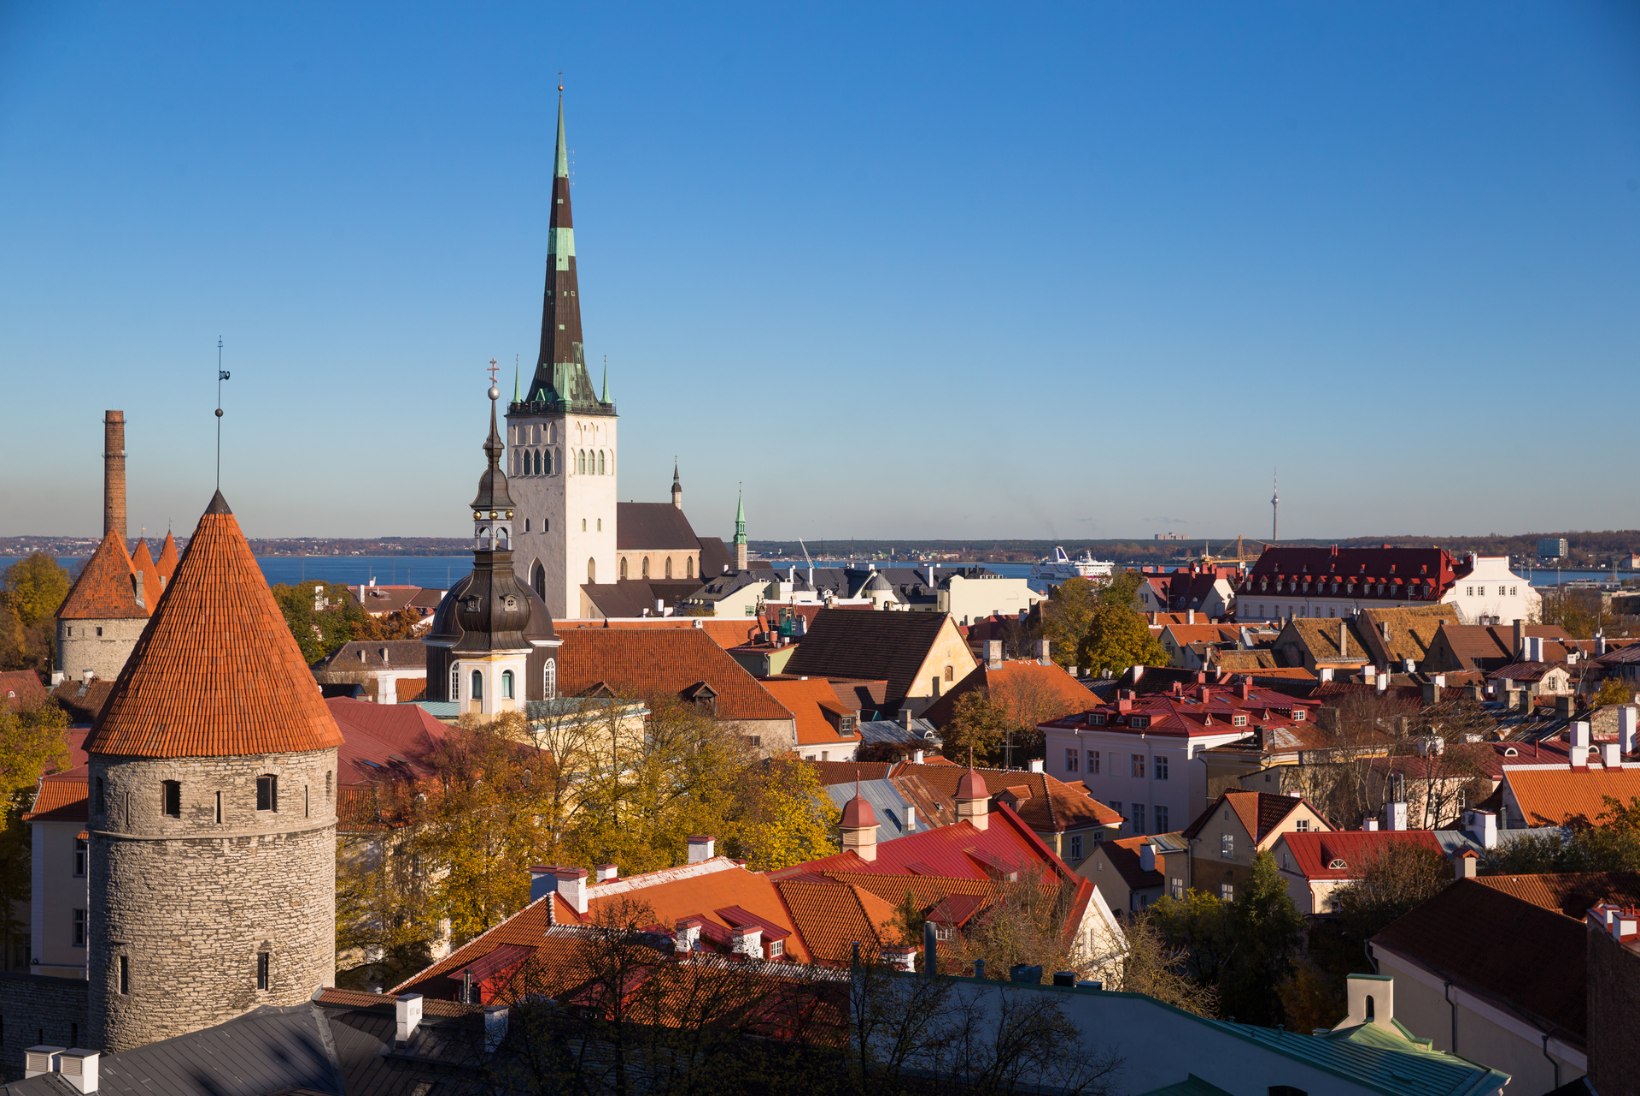 Kas Tallinn on tõesti parim reisisiht?